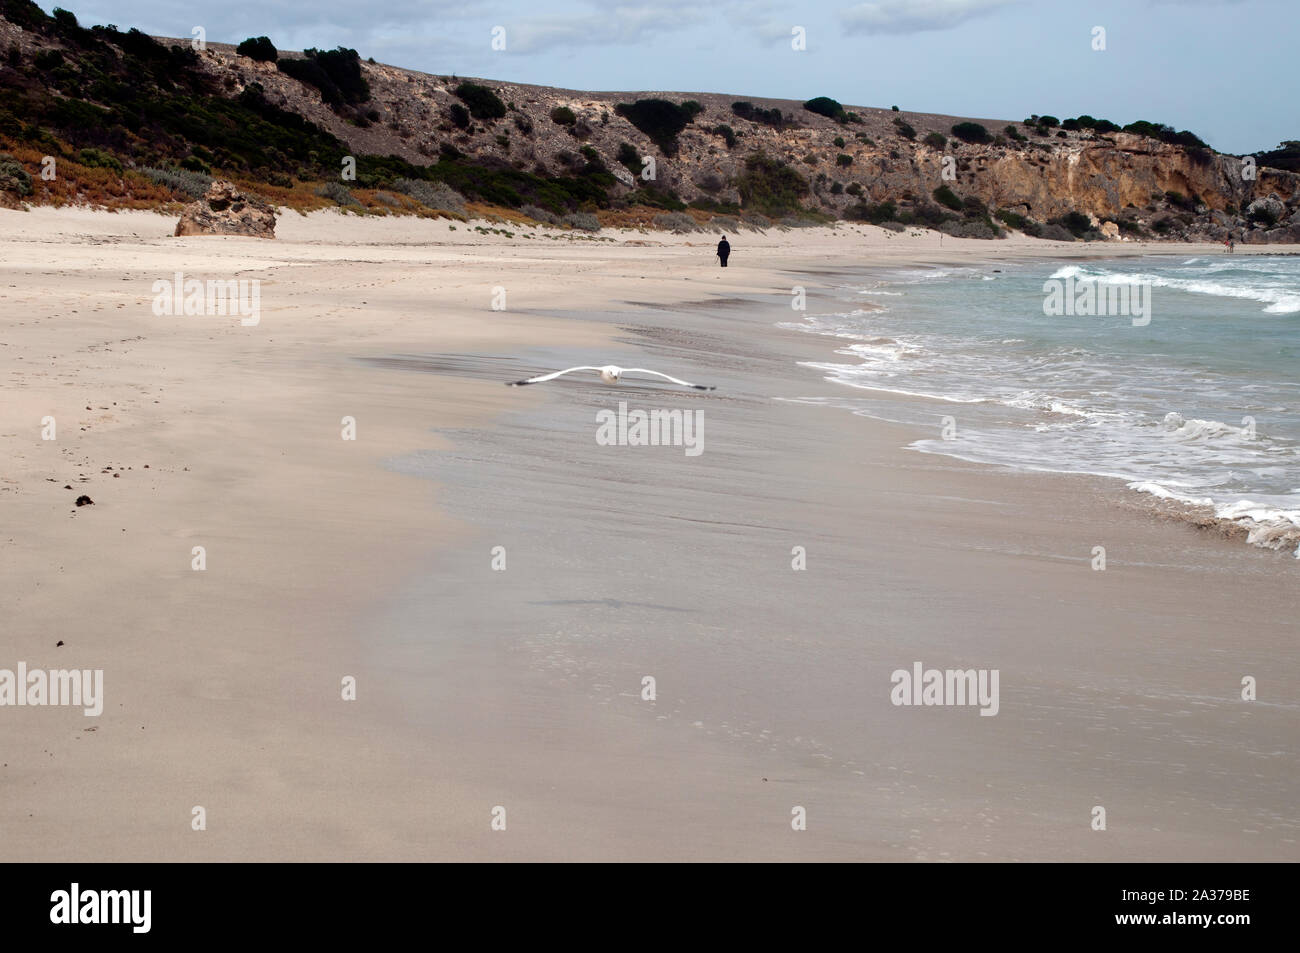 Kangaroo Island Australia, seagull flying along beach at Stokes Bay Stock Photo